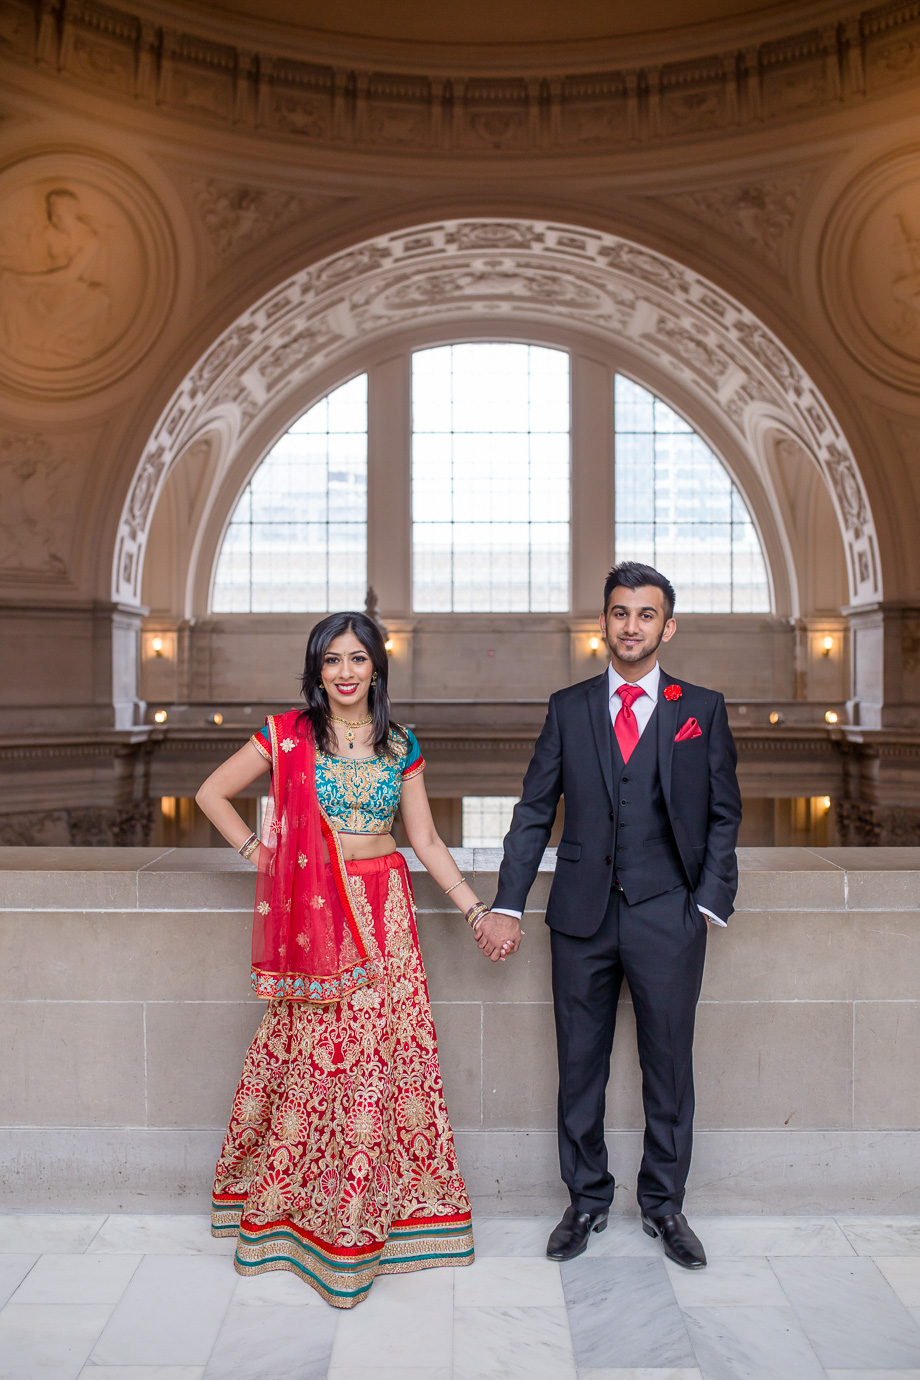 beautiful couple got married at SF city hall - San Francisco wedding photographer